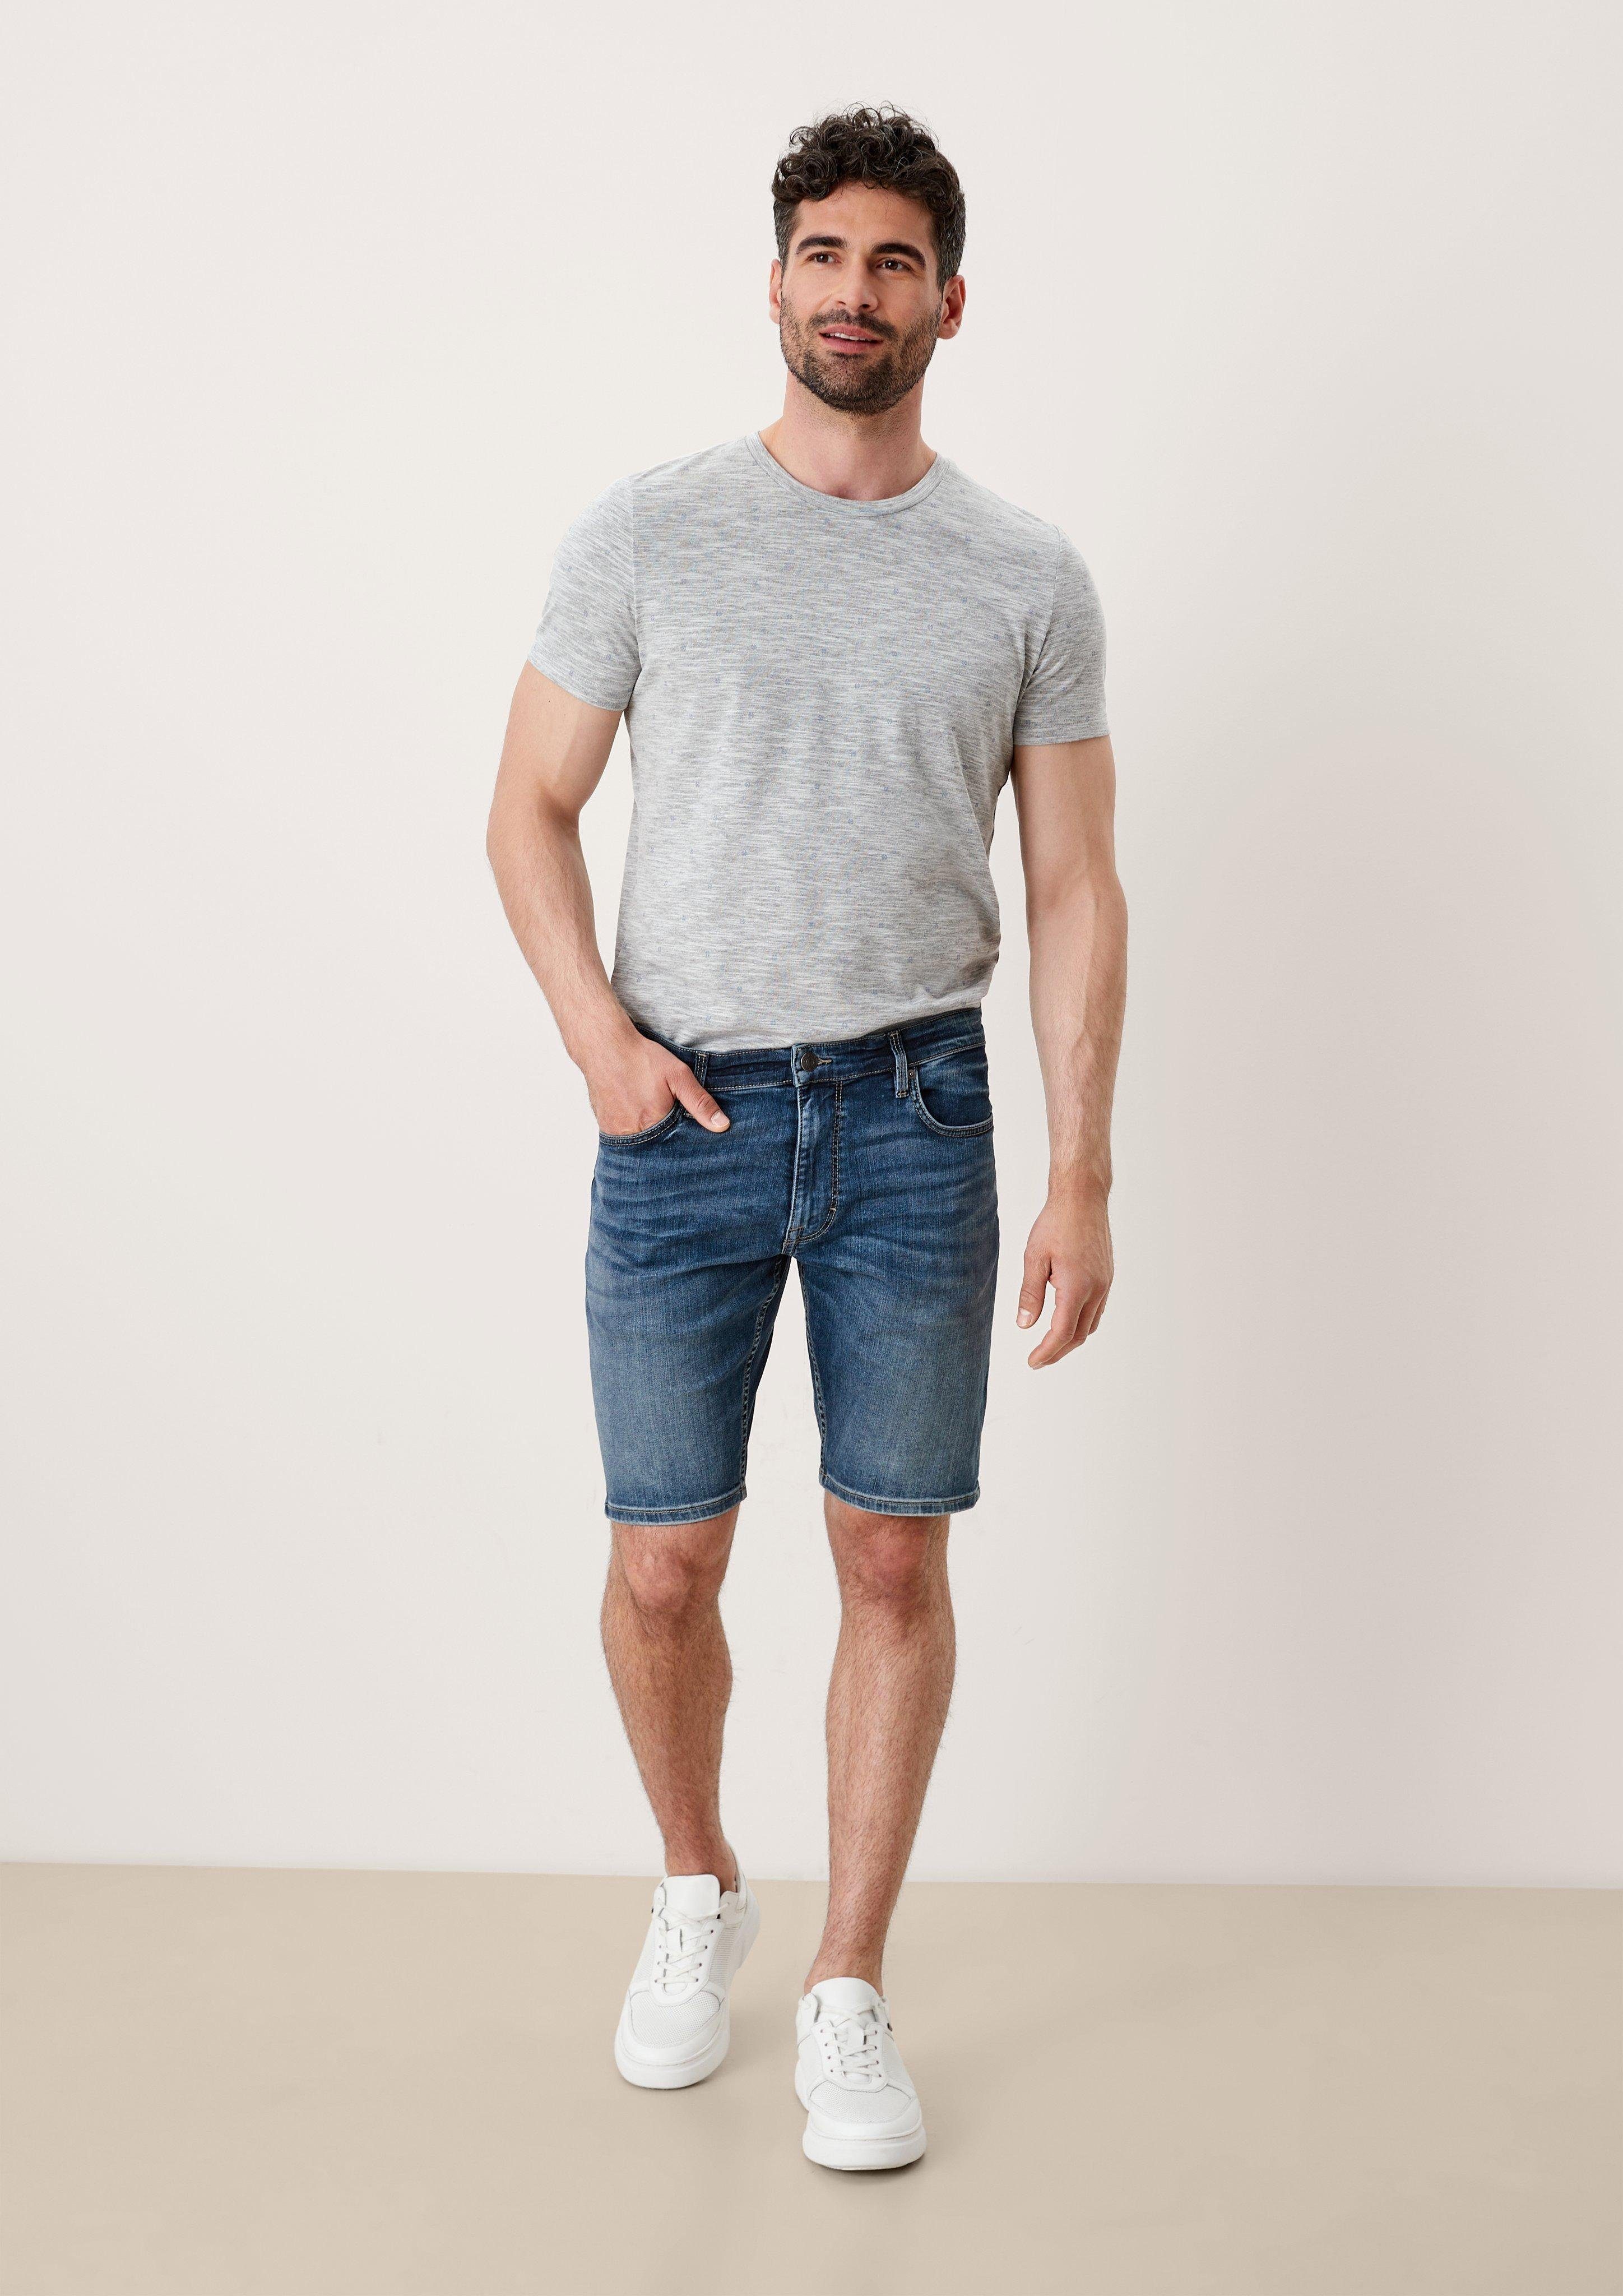 s.Oliver Bermudas Jeans-Bermuda Keith / Slim Fit / Mid Rise / Slim: Leg Waschung dark blue stretche